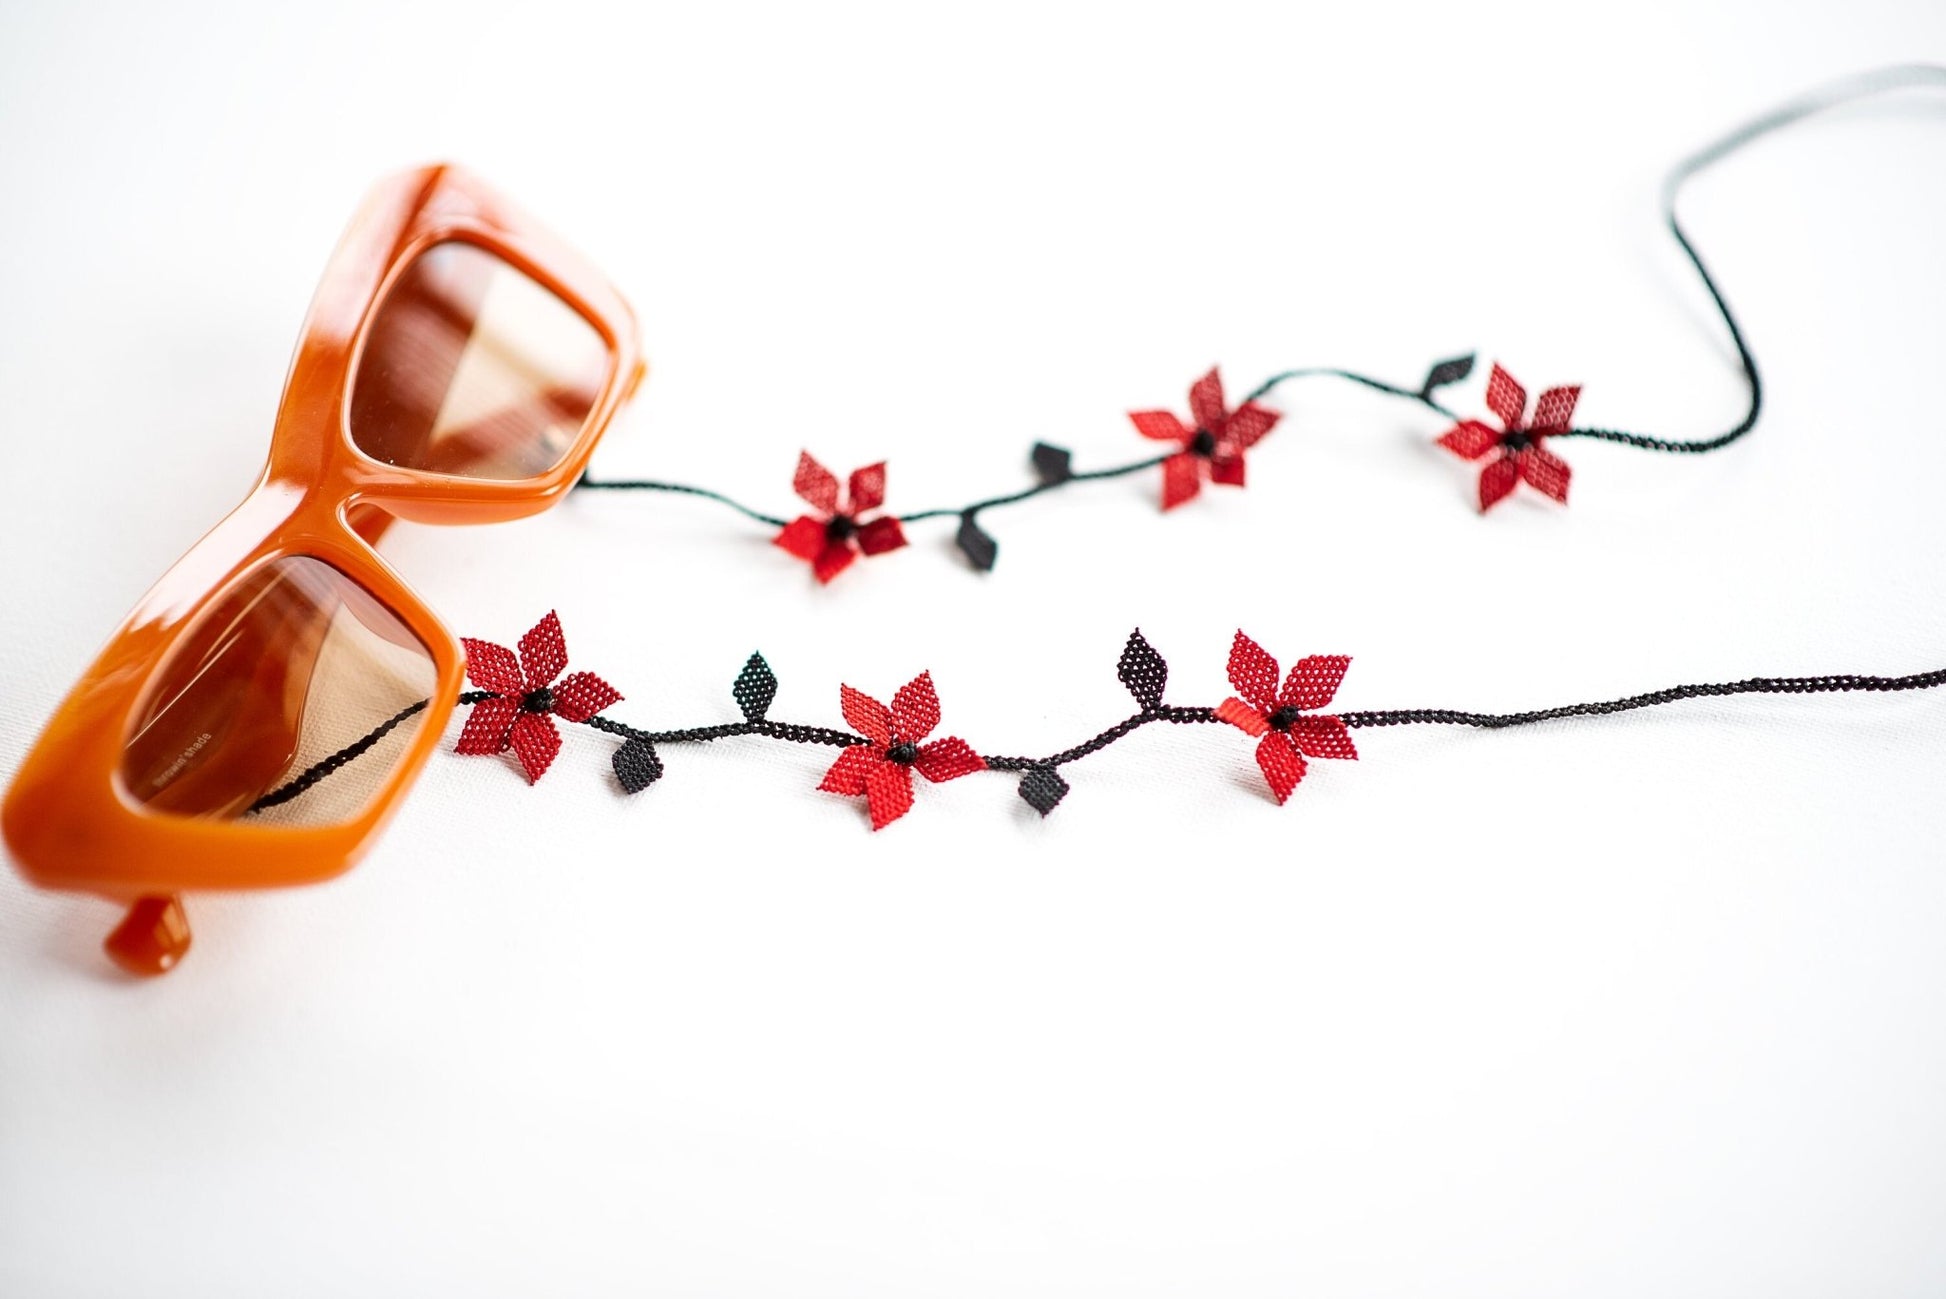 Floral Eyeglass Chain - Hemsin Atelier